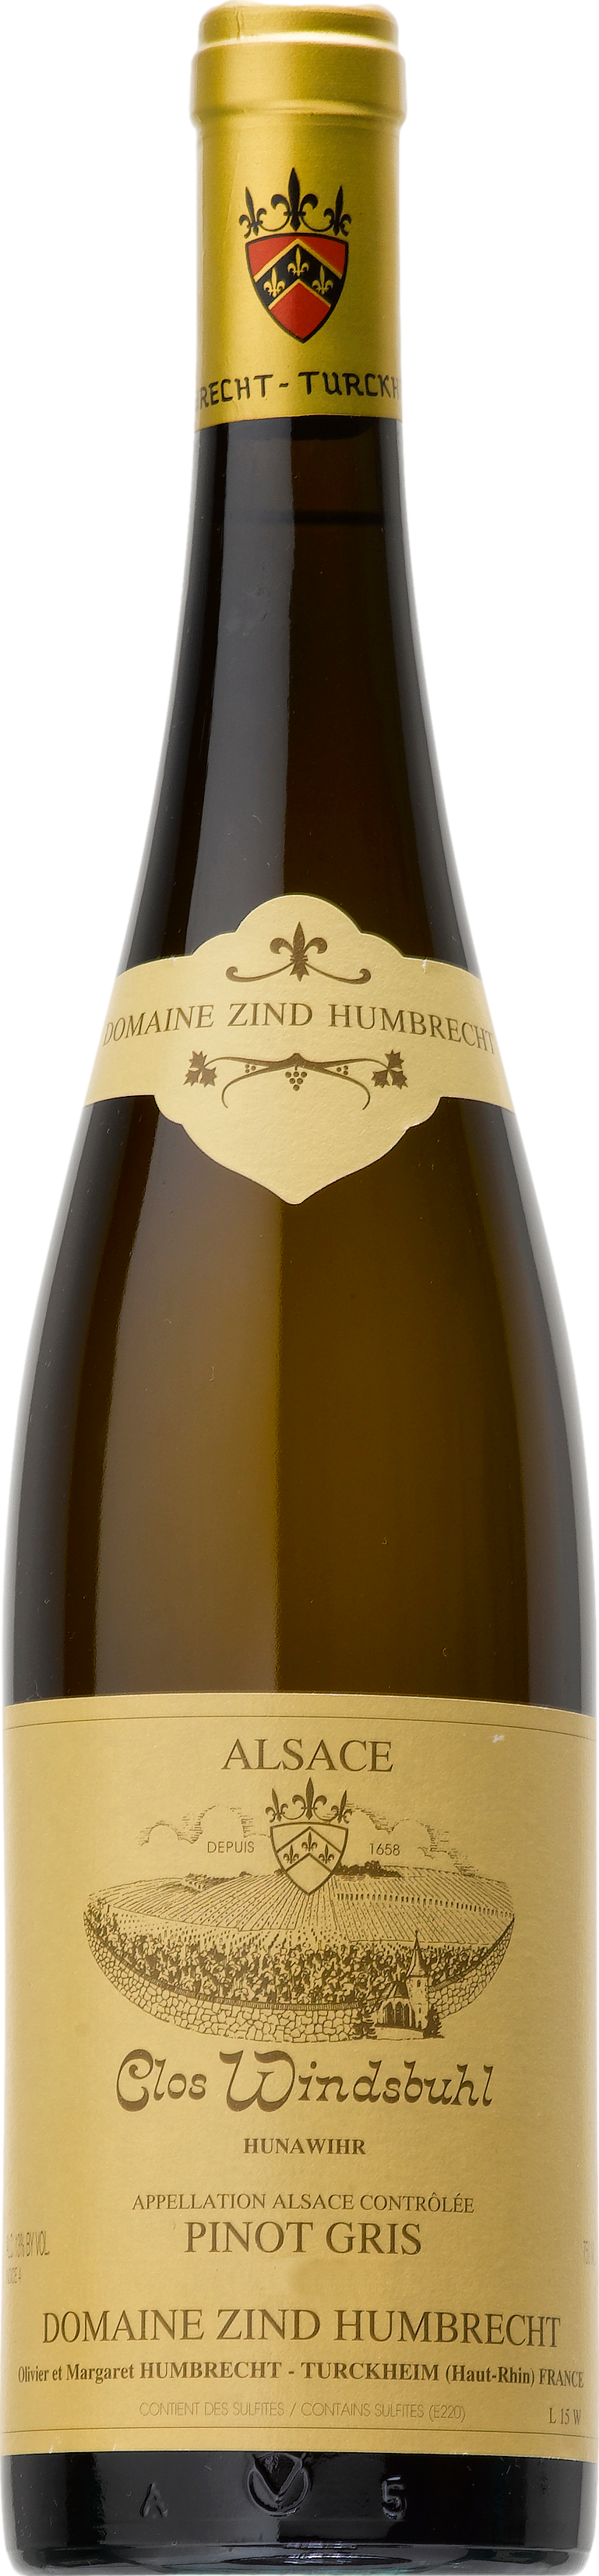 2014/2015 günstig Kaufen-Domaine Zind-Humbrecht Pinot Gris Clos Windsbuhl 2015. Domaine Zind-Humbrecht Pinot Gris Clos Windsbuhl 2015 . 